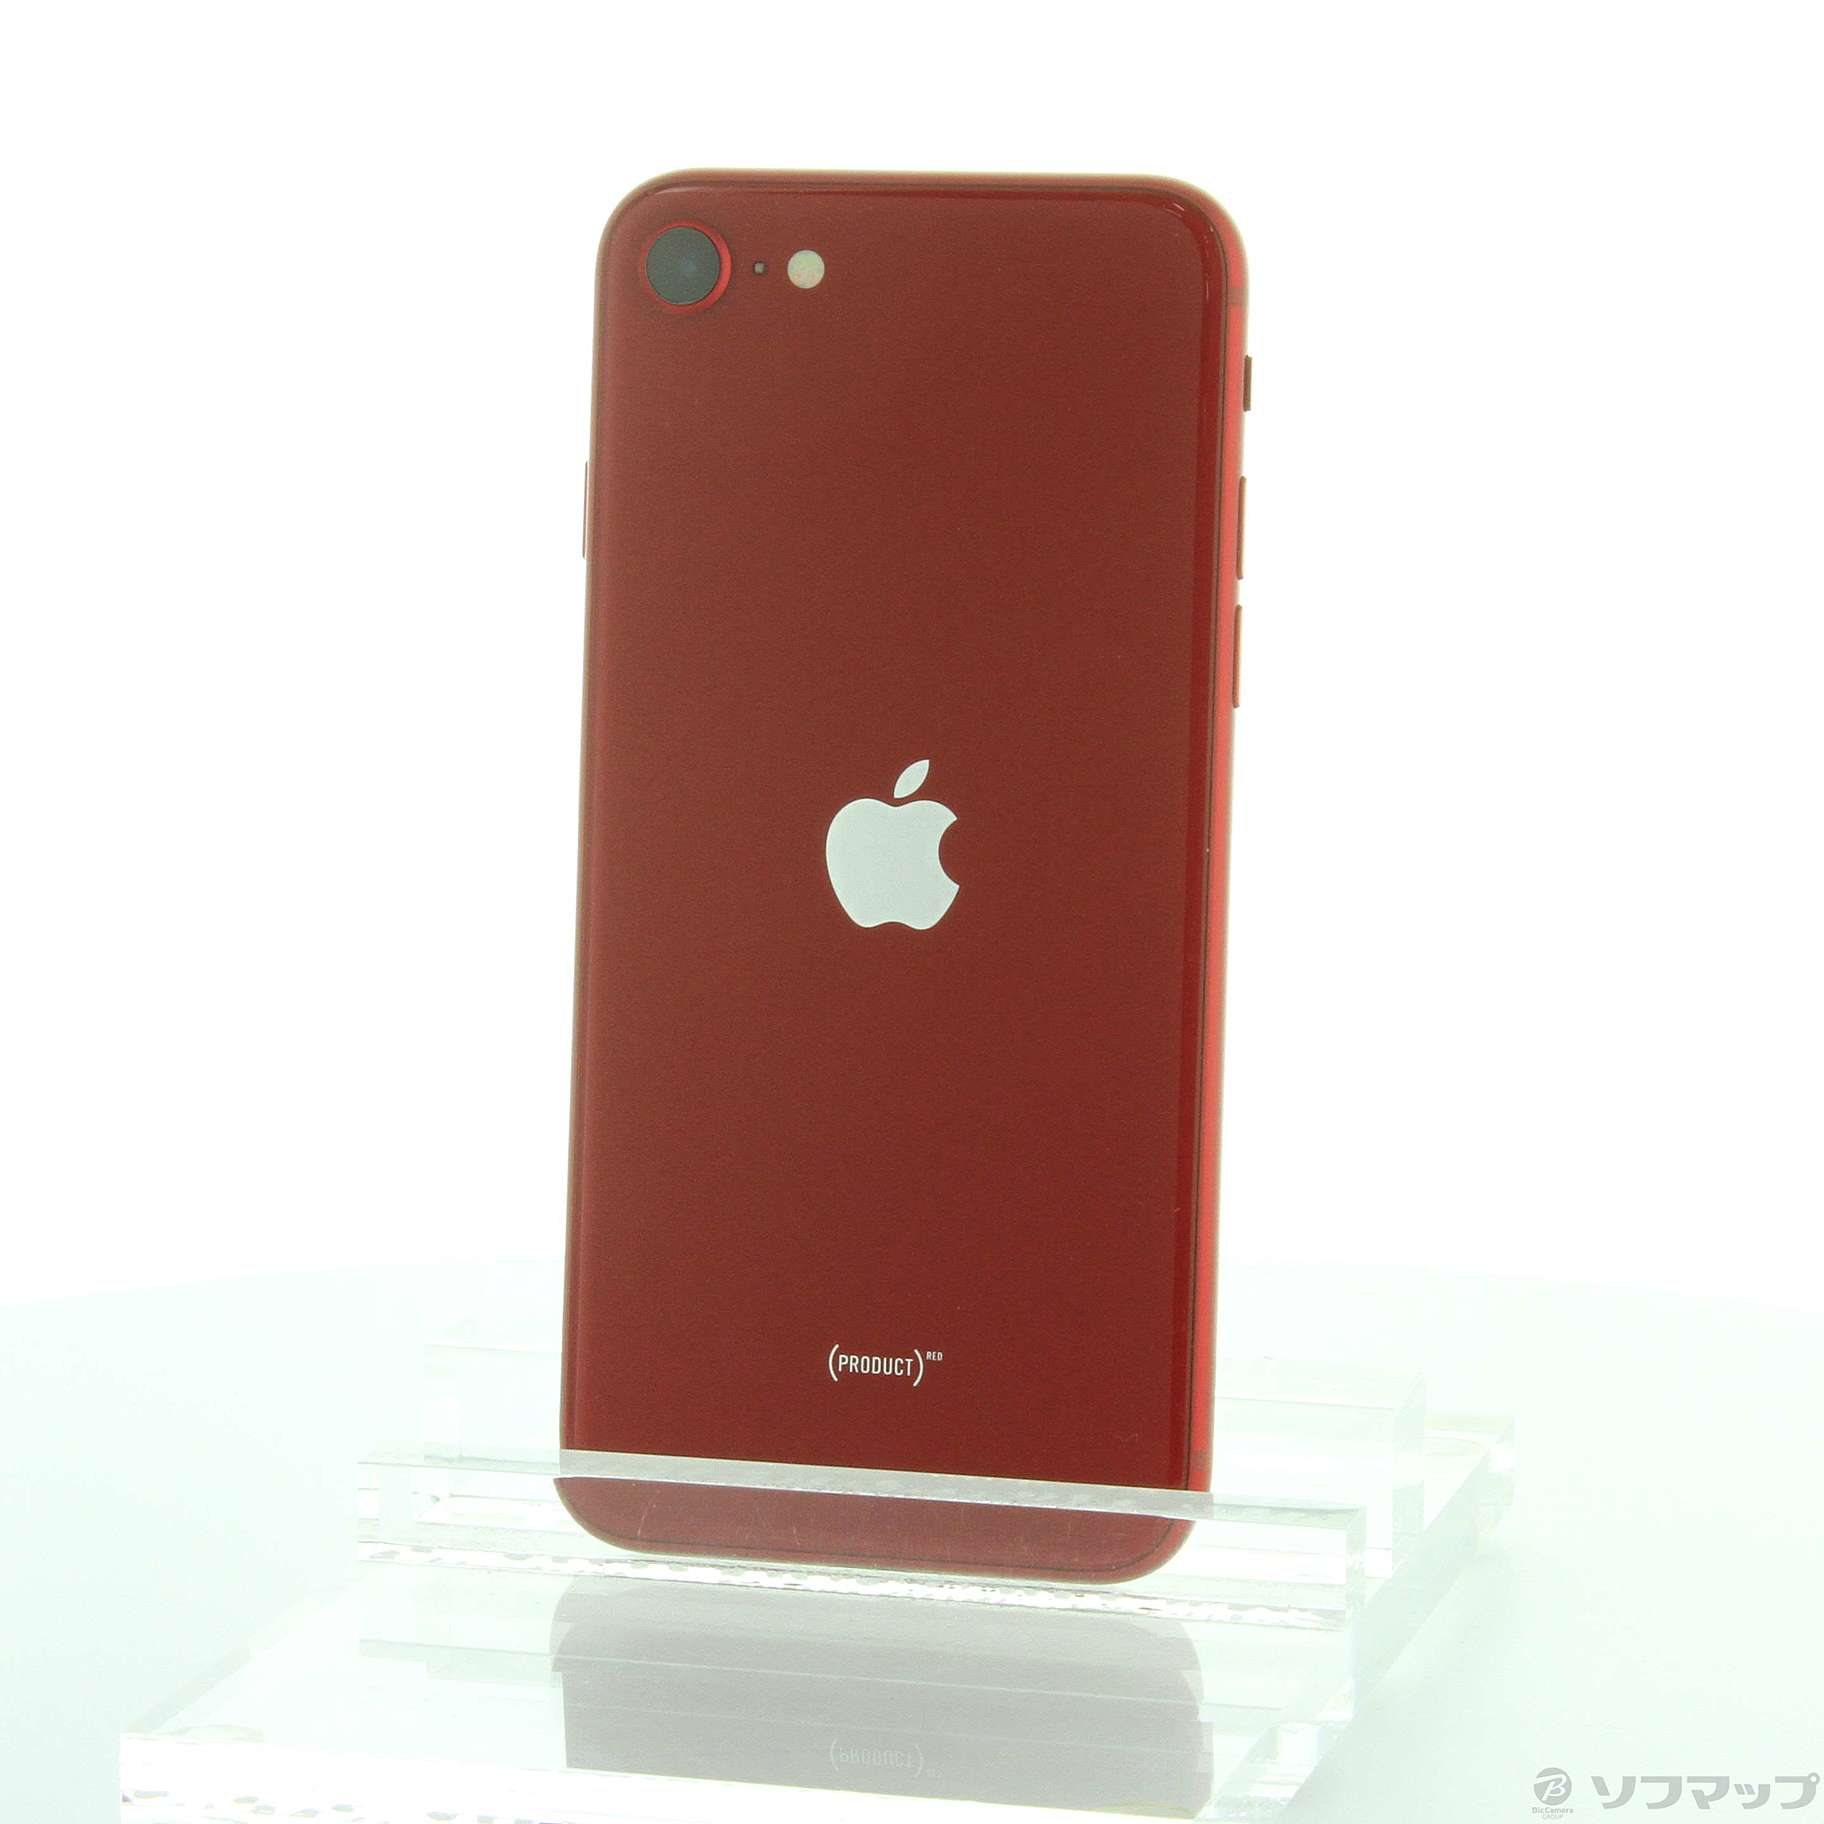 Apple】iPhone SE 第2世代 64GB SIMフリー品 NX9U2J/A スマートフォン 